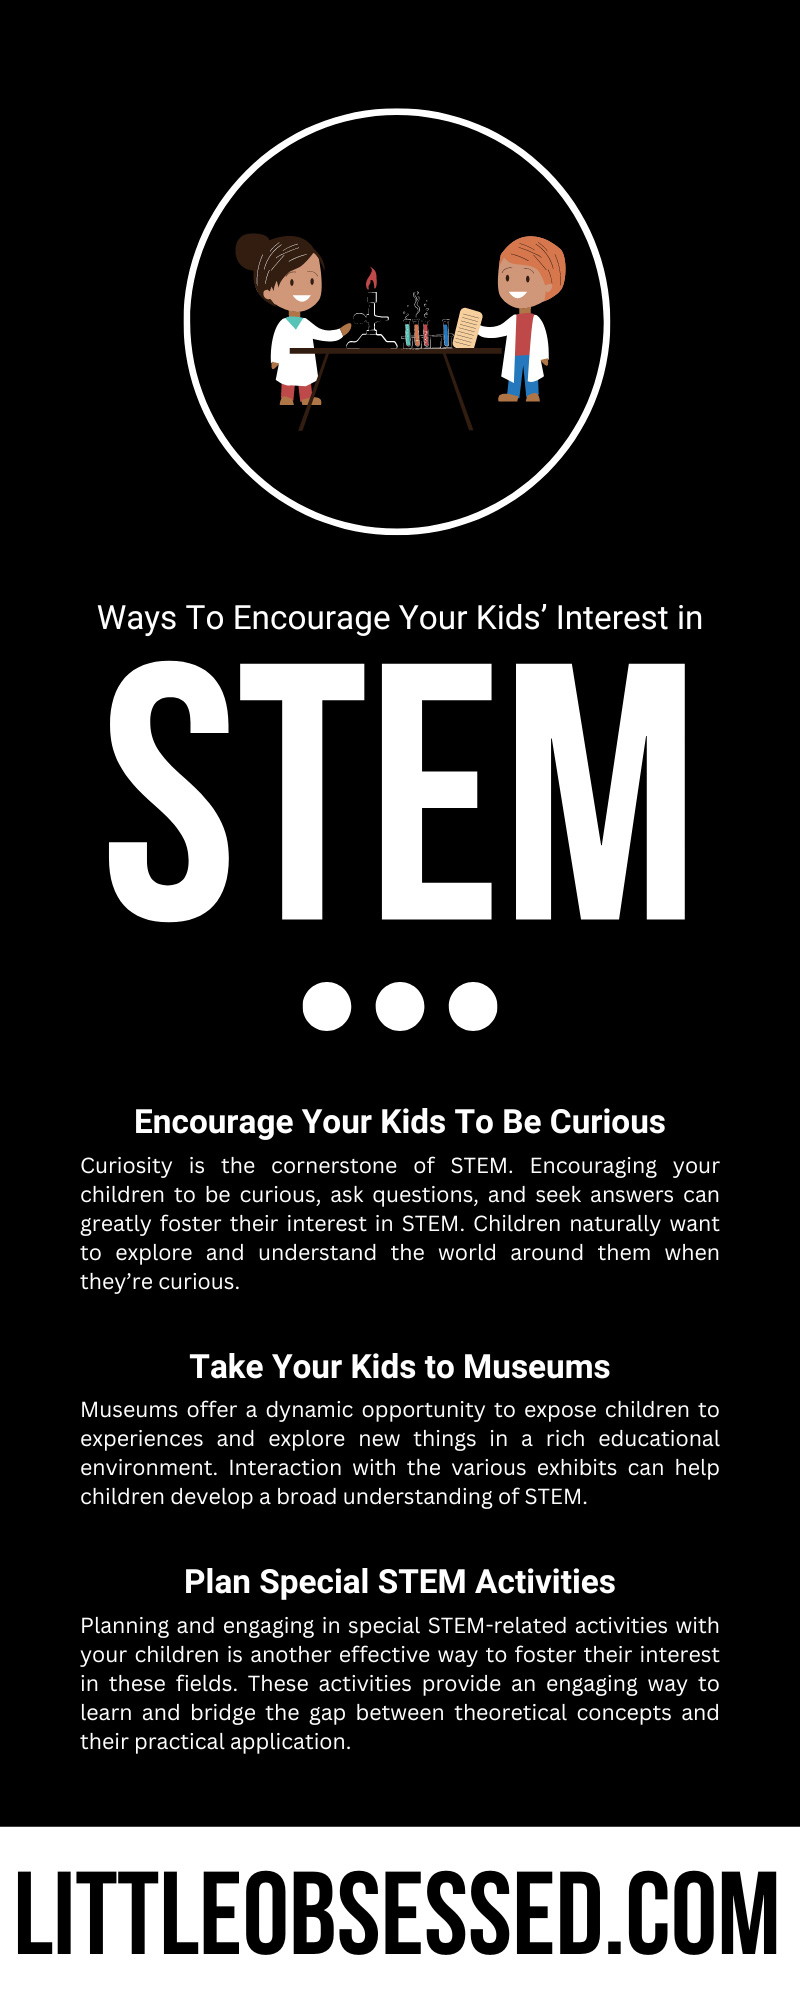 Ways To Encourage Your Kids’ Interest in STEM